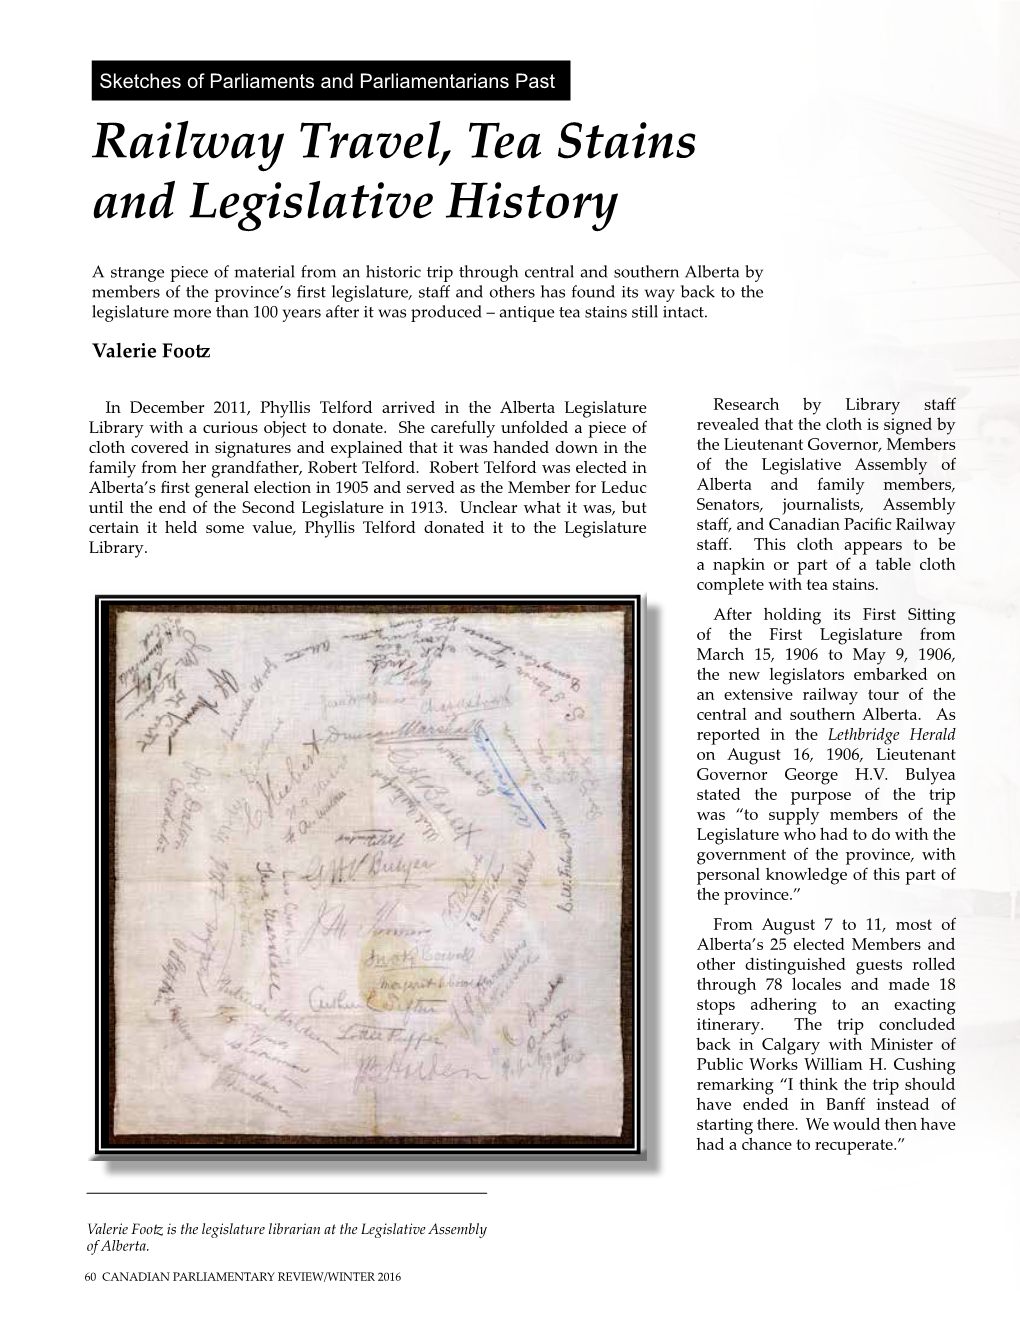 Railway Travel, Tea Stains and Legislative History